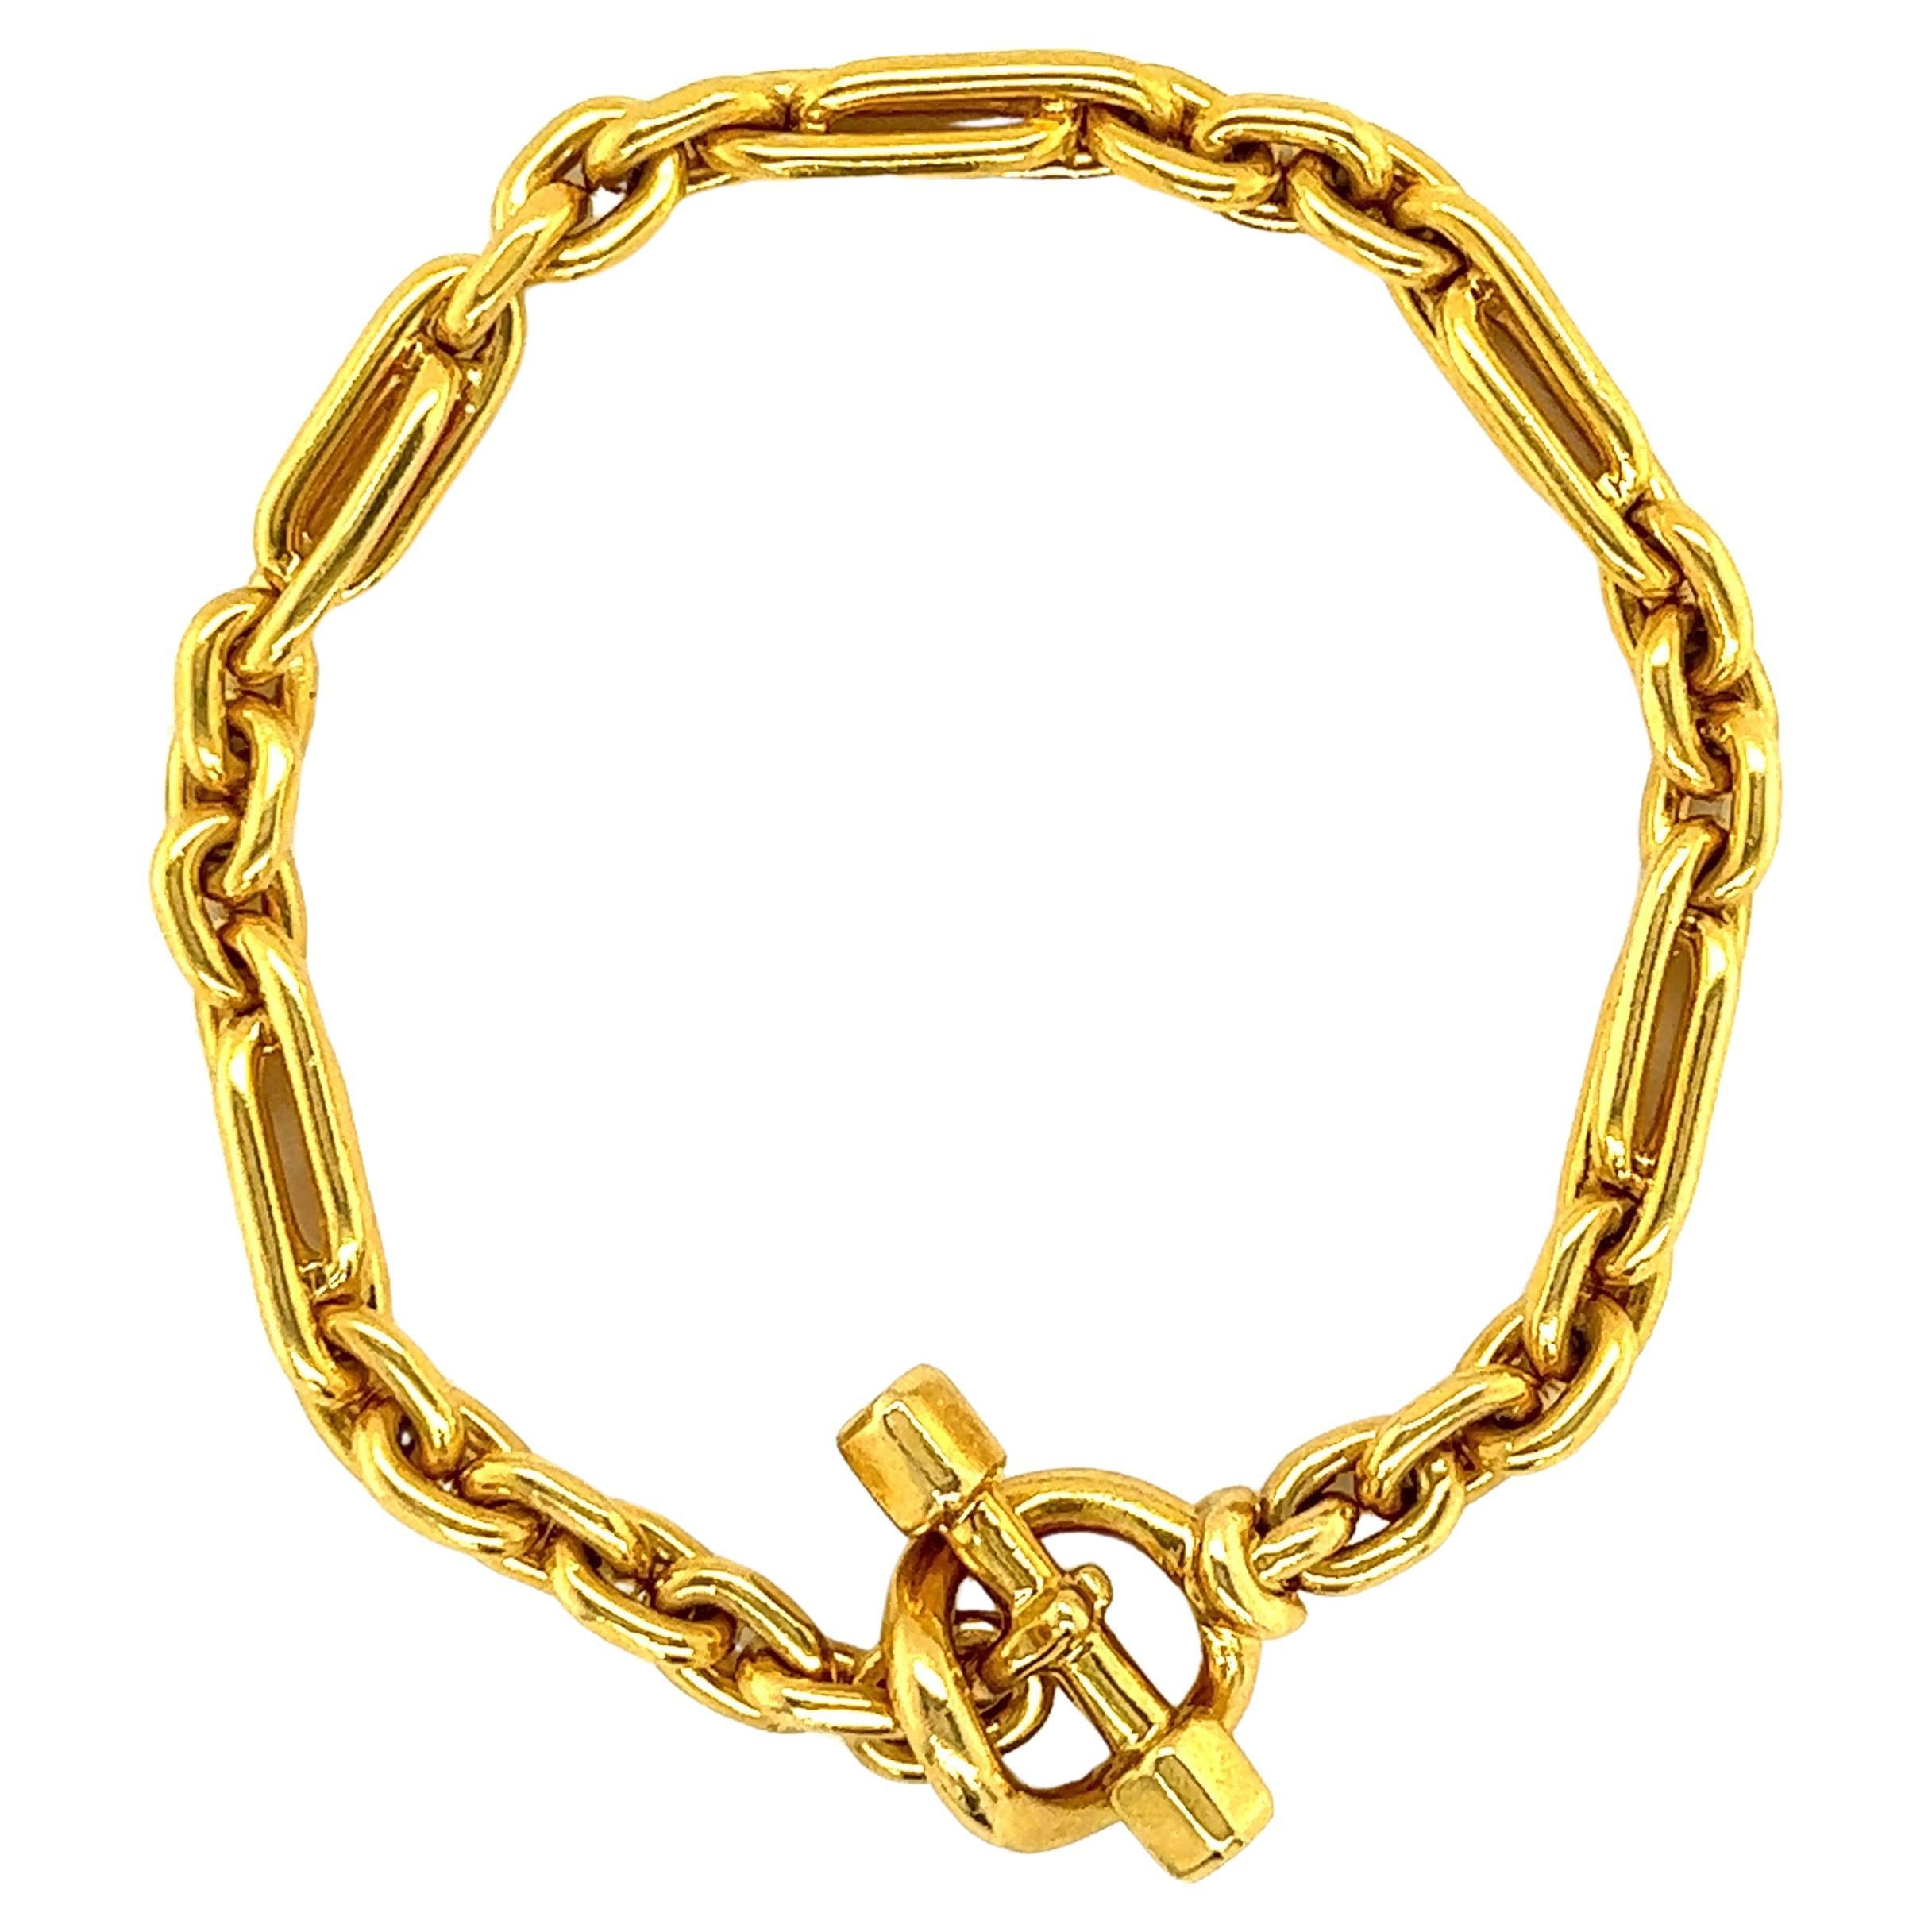 Hermés Paris 18k Yellow Gold Link Bracelet